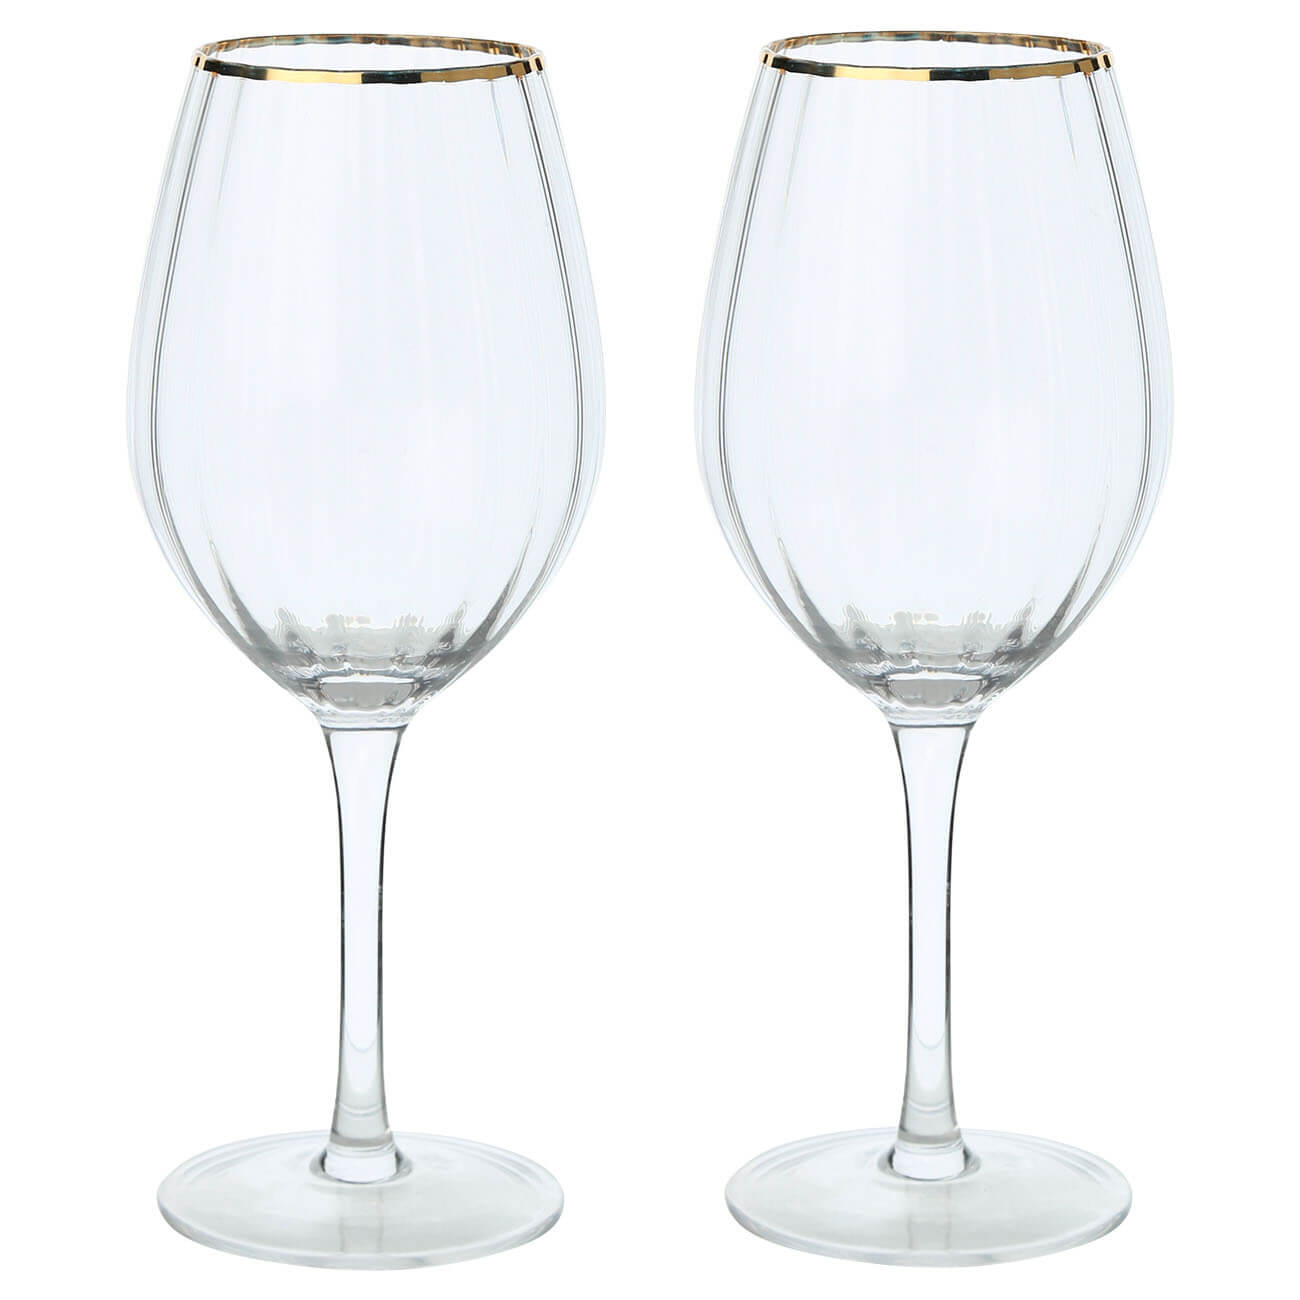 Бокал для вина, 530 мл, 2 шт, стекло, с золотистым кантом, Lombardy R Gold бокал кубок для шампанского 180 мл 2 шт стекло серо коричневый с золотистым кантом manito